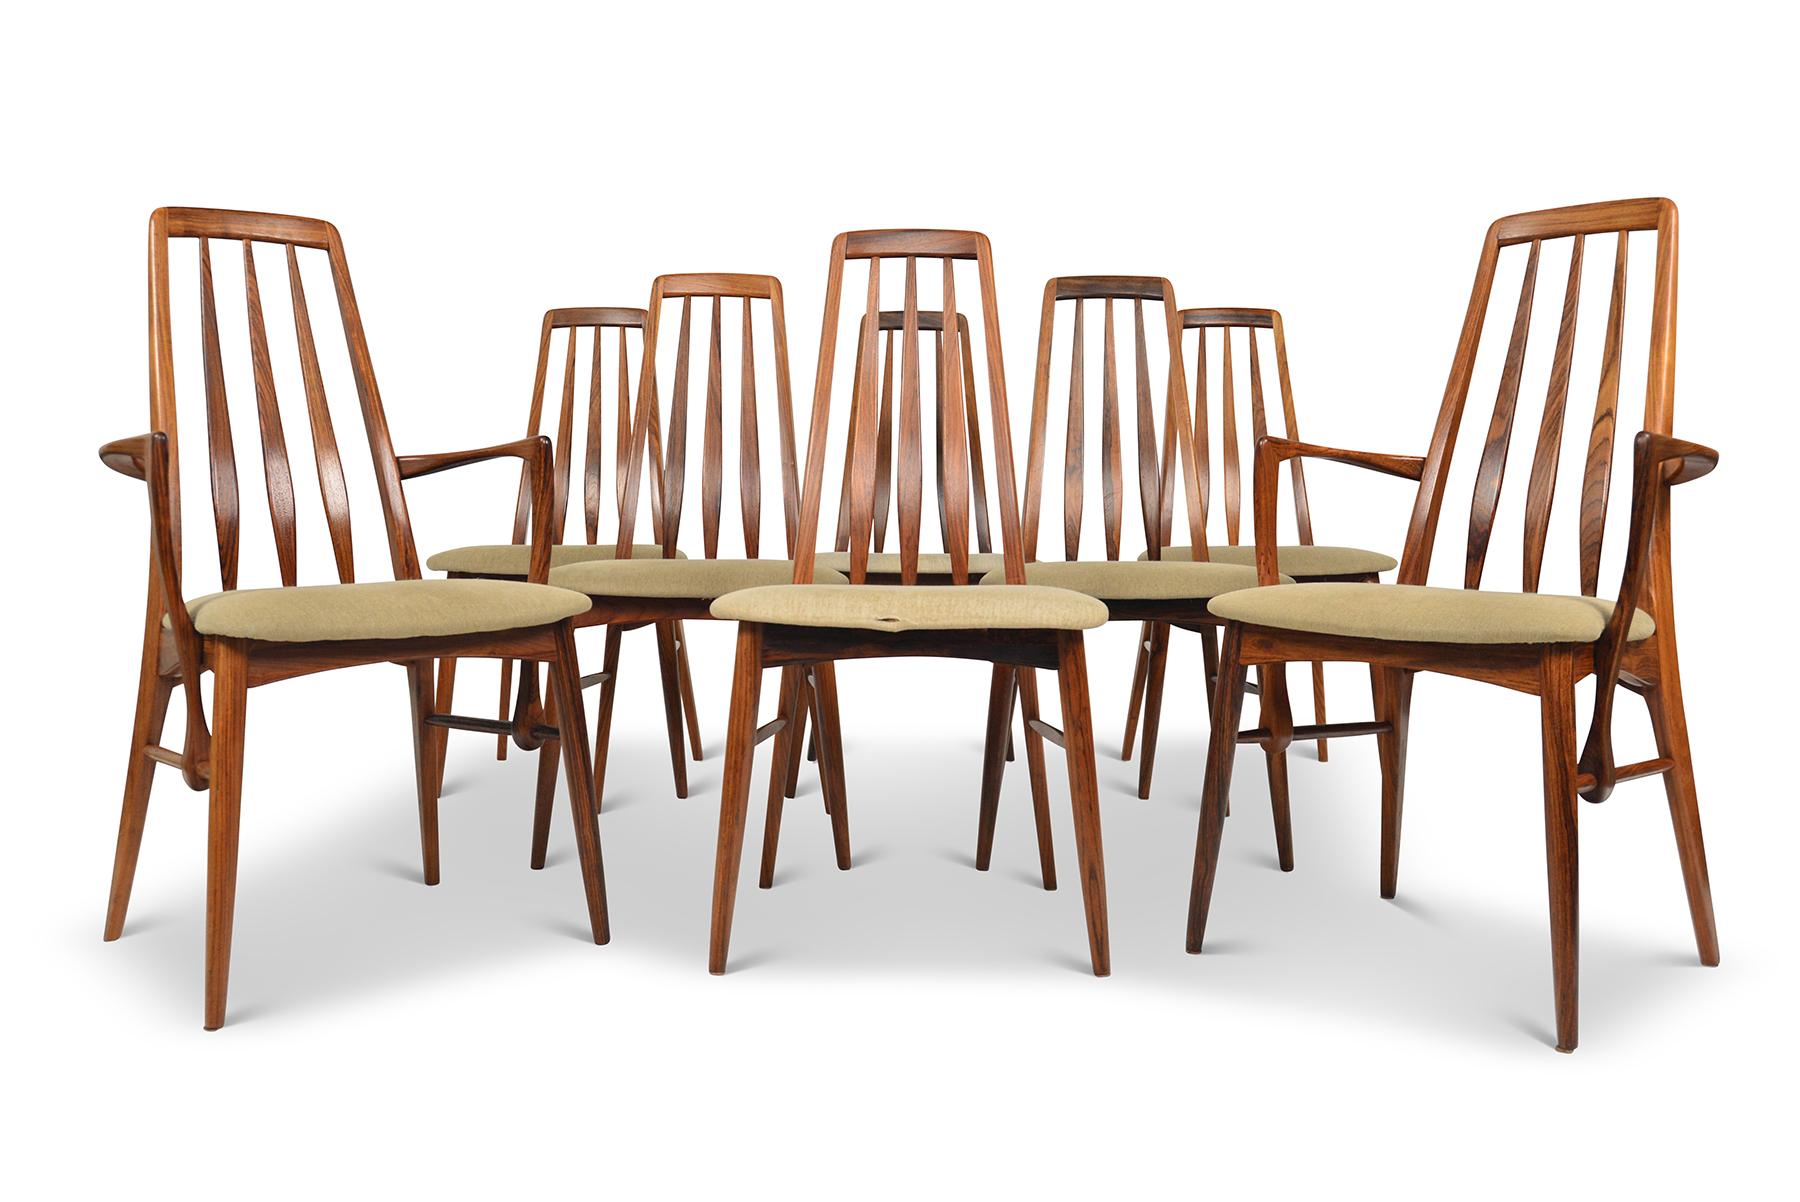 Origin: Denmark
Designer: Niels Koefoed
Manufacturer: Koefoed Hornslet Møbelfabrik
Era: 1960s
Dimensions (side chairs): 19 wide x 16 deep x 37.5 tall, seat: 19 wide x 15 deep x 18 tall
Captain’s chairs: 21 wide x 18 deep x 37.5 tall, seat: 19